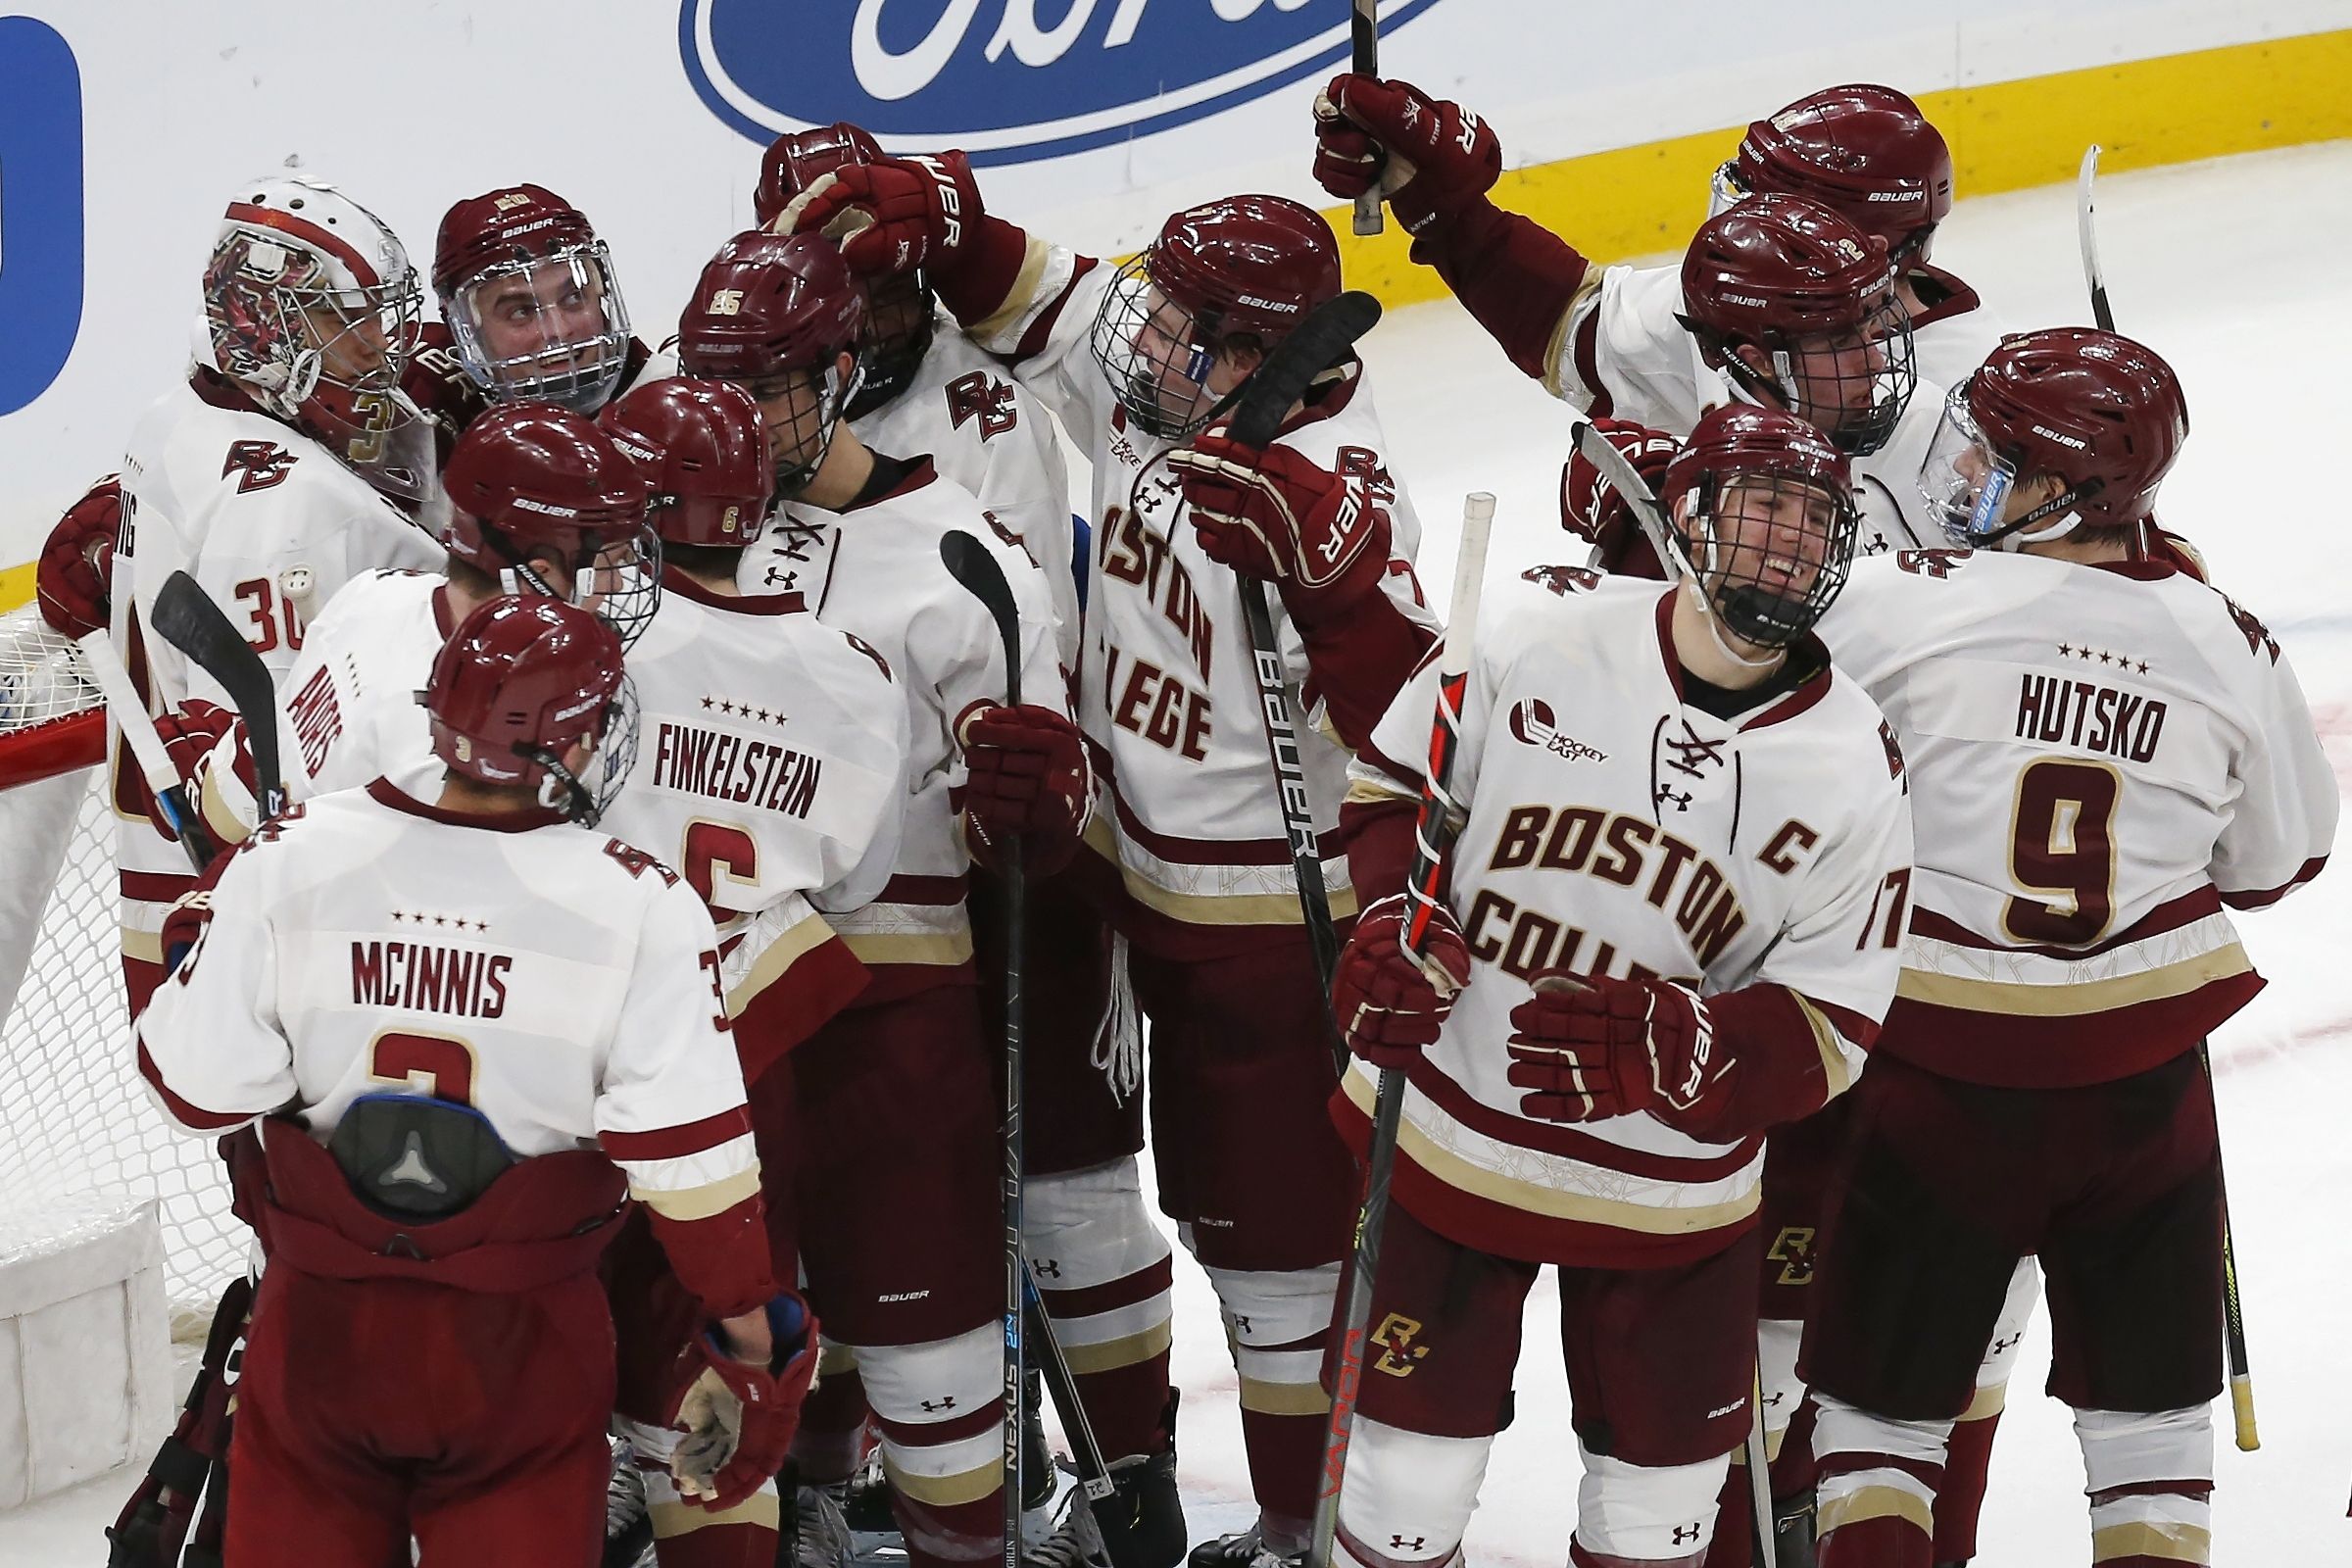 Boston College postpones upcoming college hockey games against